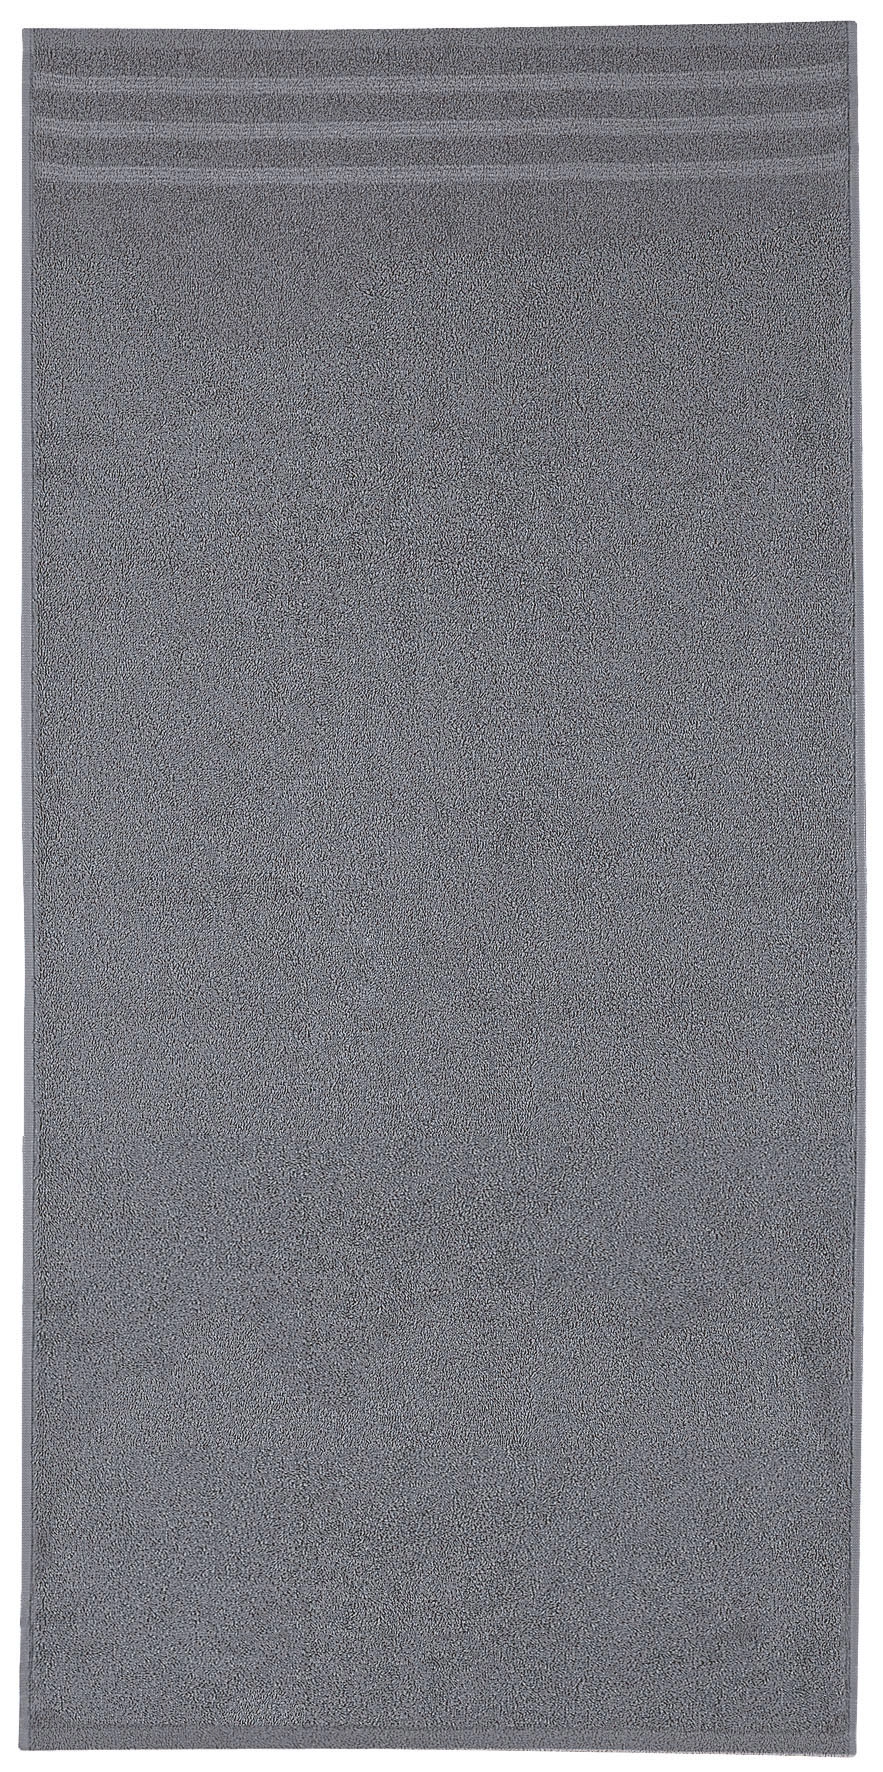 Handtuch, Royal Dunkelgrau, 50x100 cm